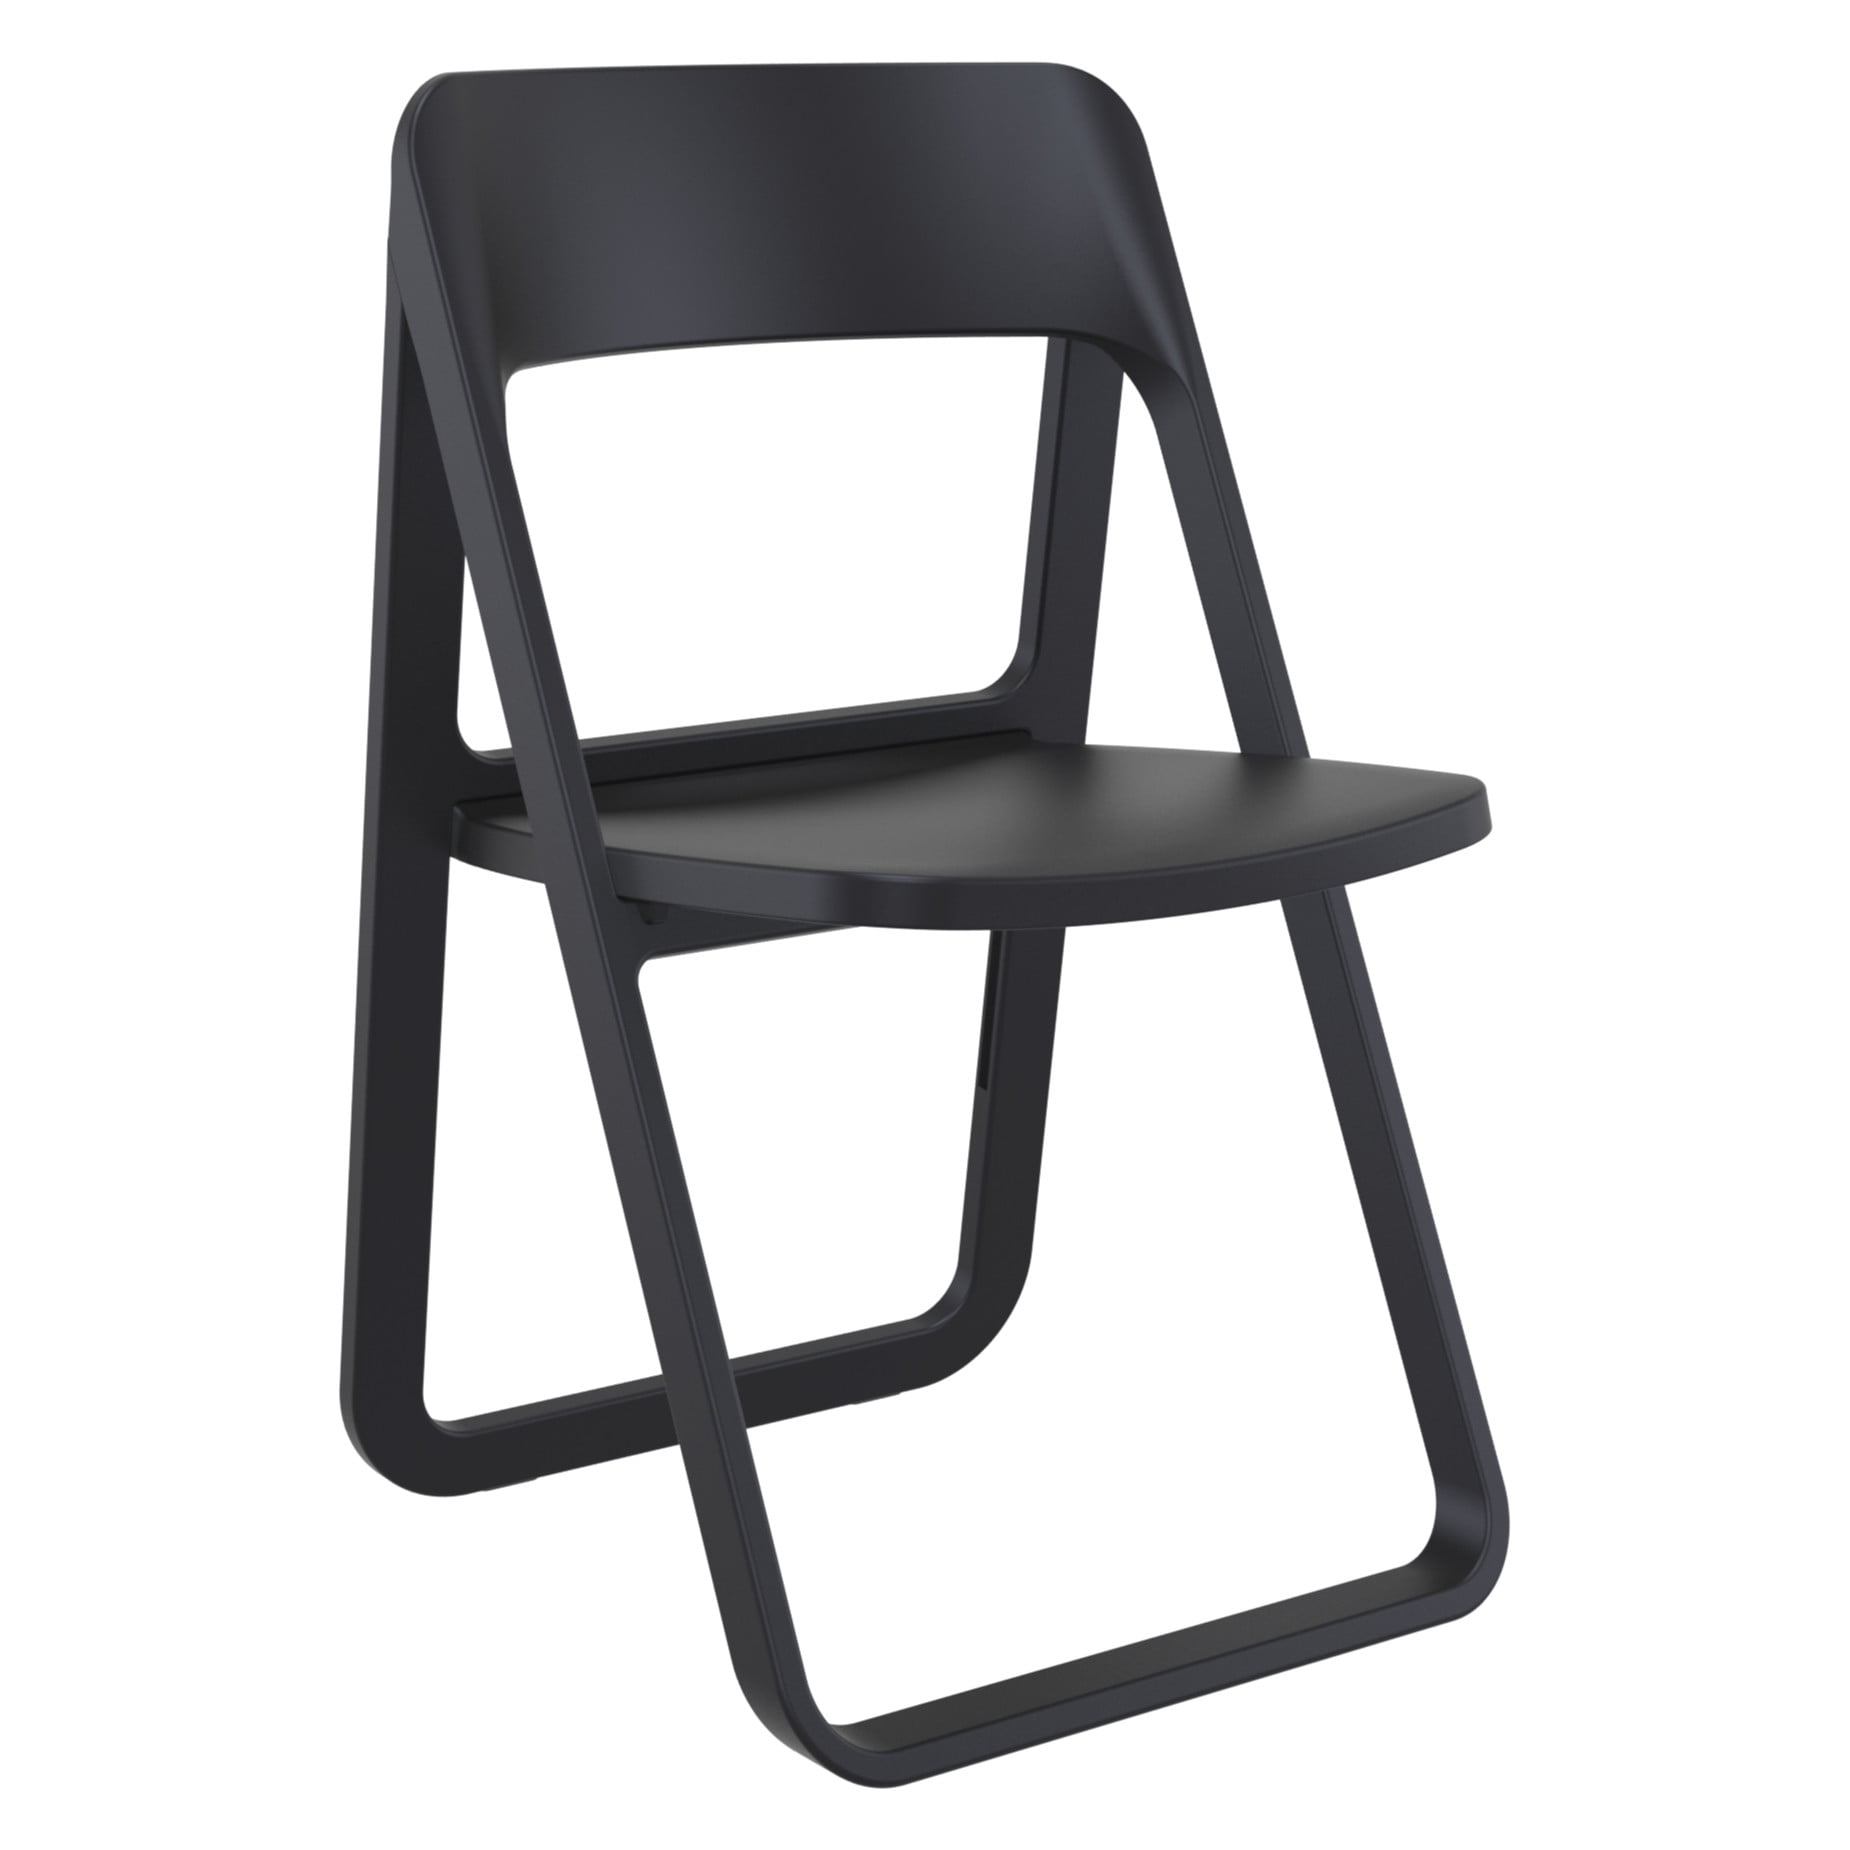 Isp079-bla Dream Folding Outdoor Chair, Black